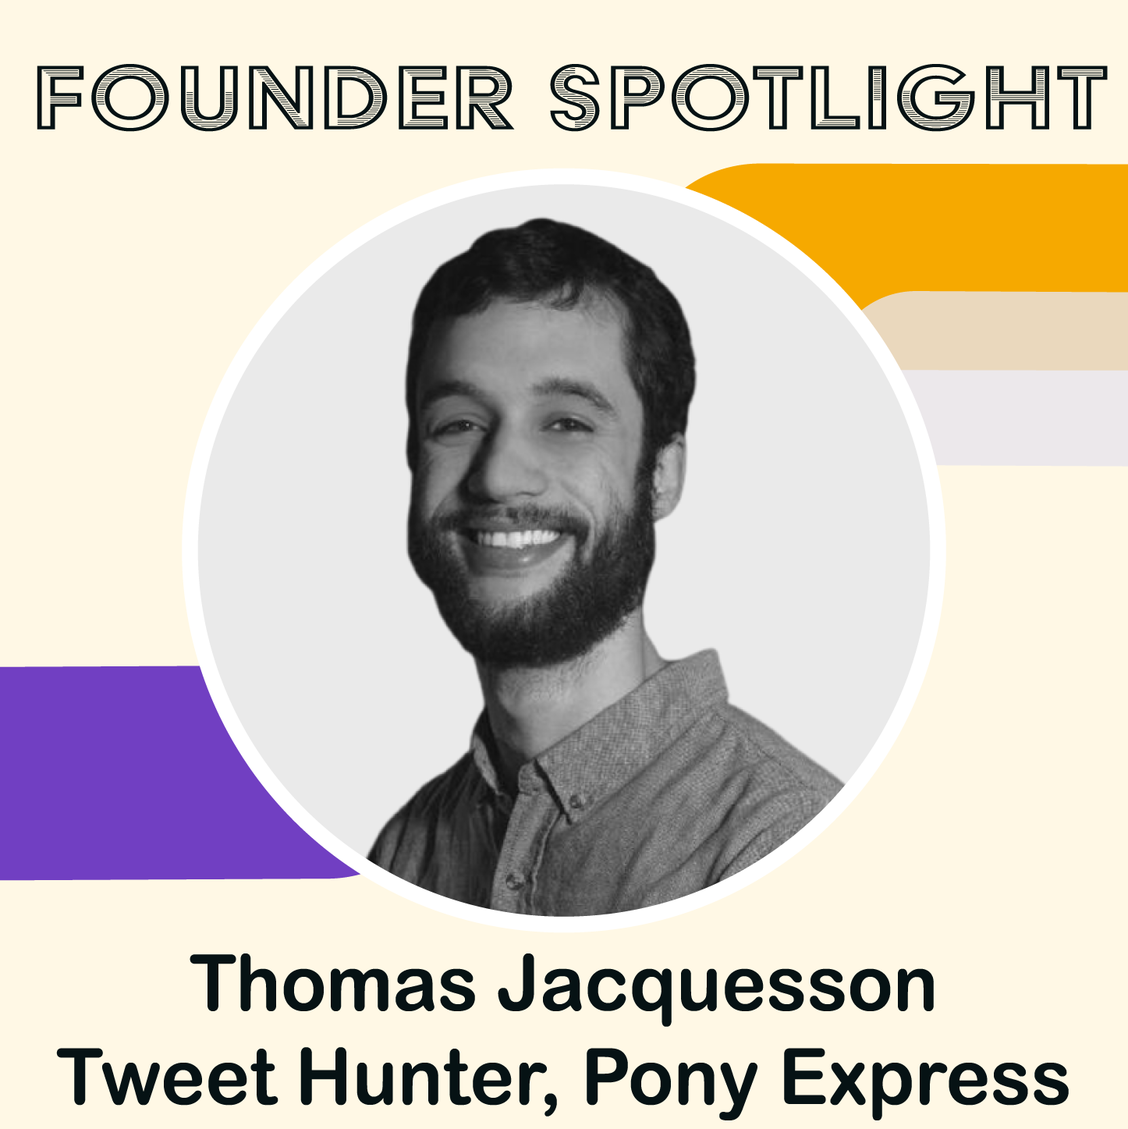 Founder Spotlight #4 - Thomas Jacquesson